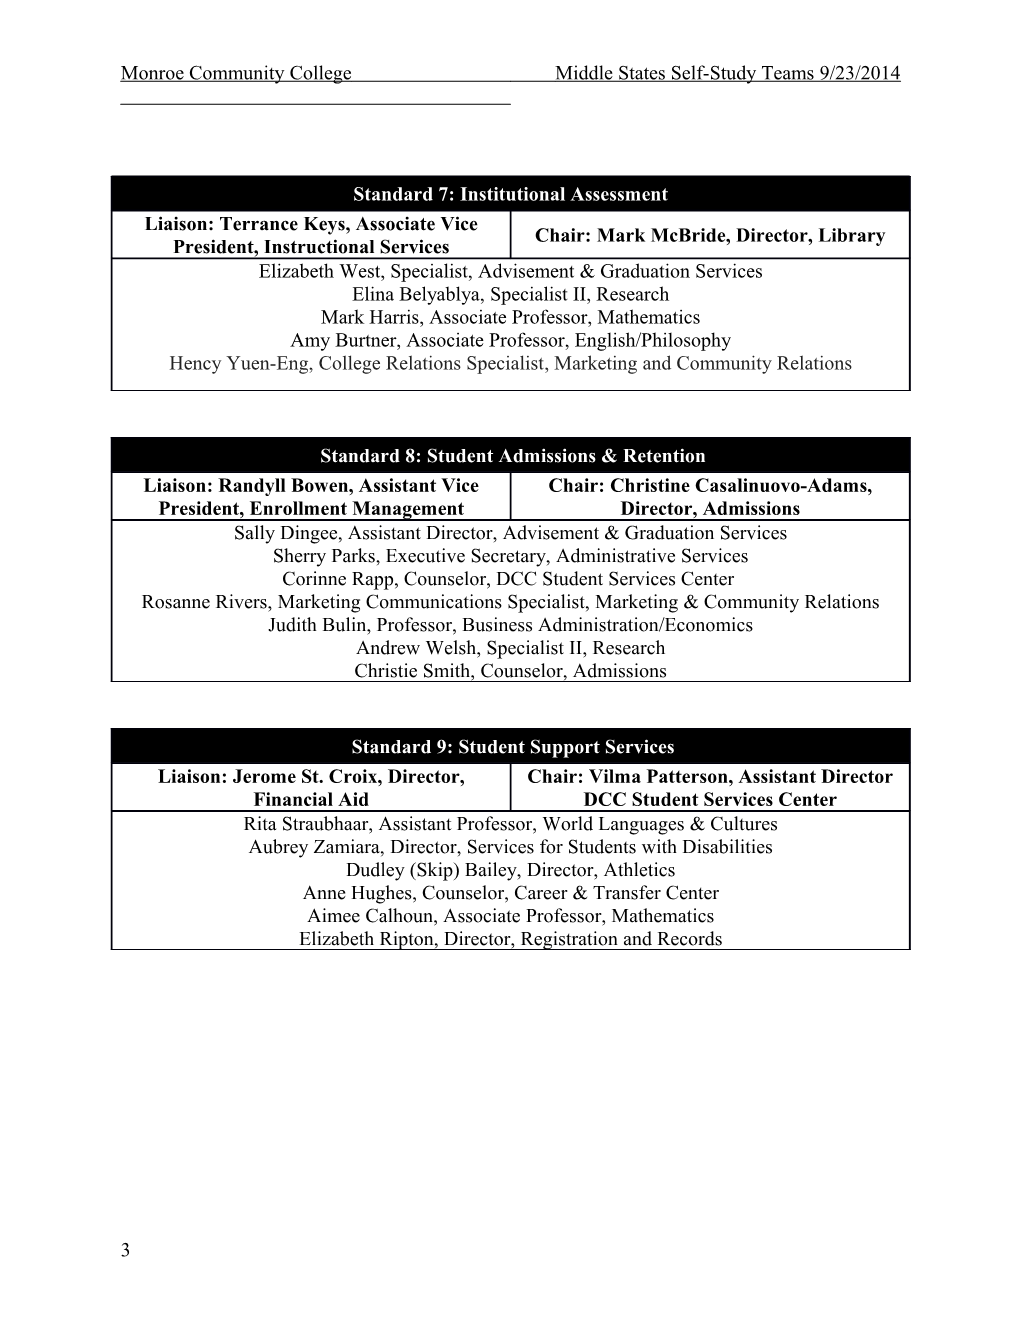 Monroe Community Collegemiddle States Self-Study Teams 9/23/2014